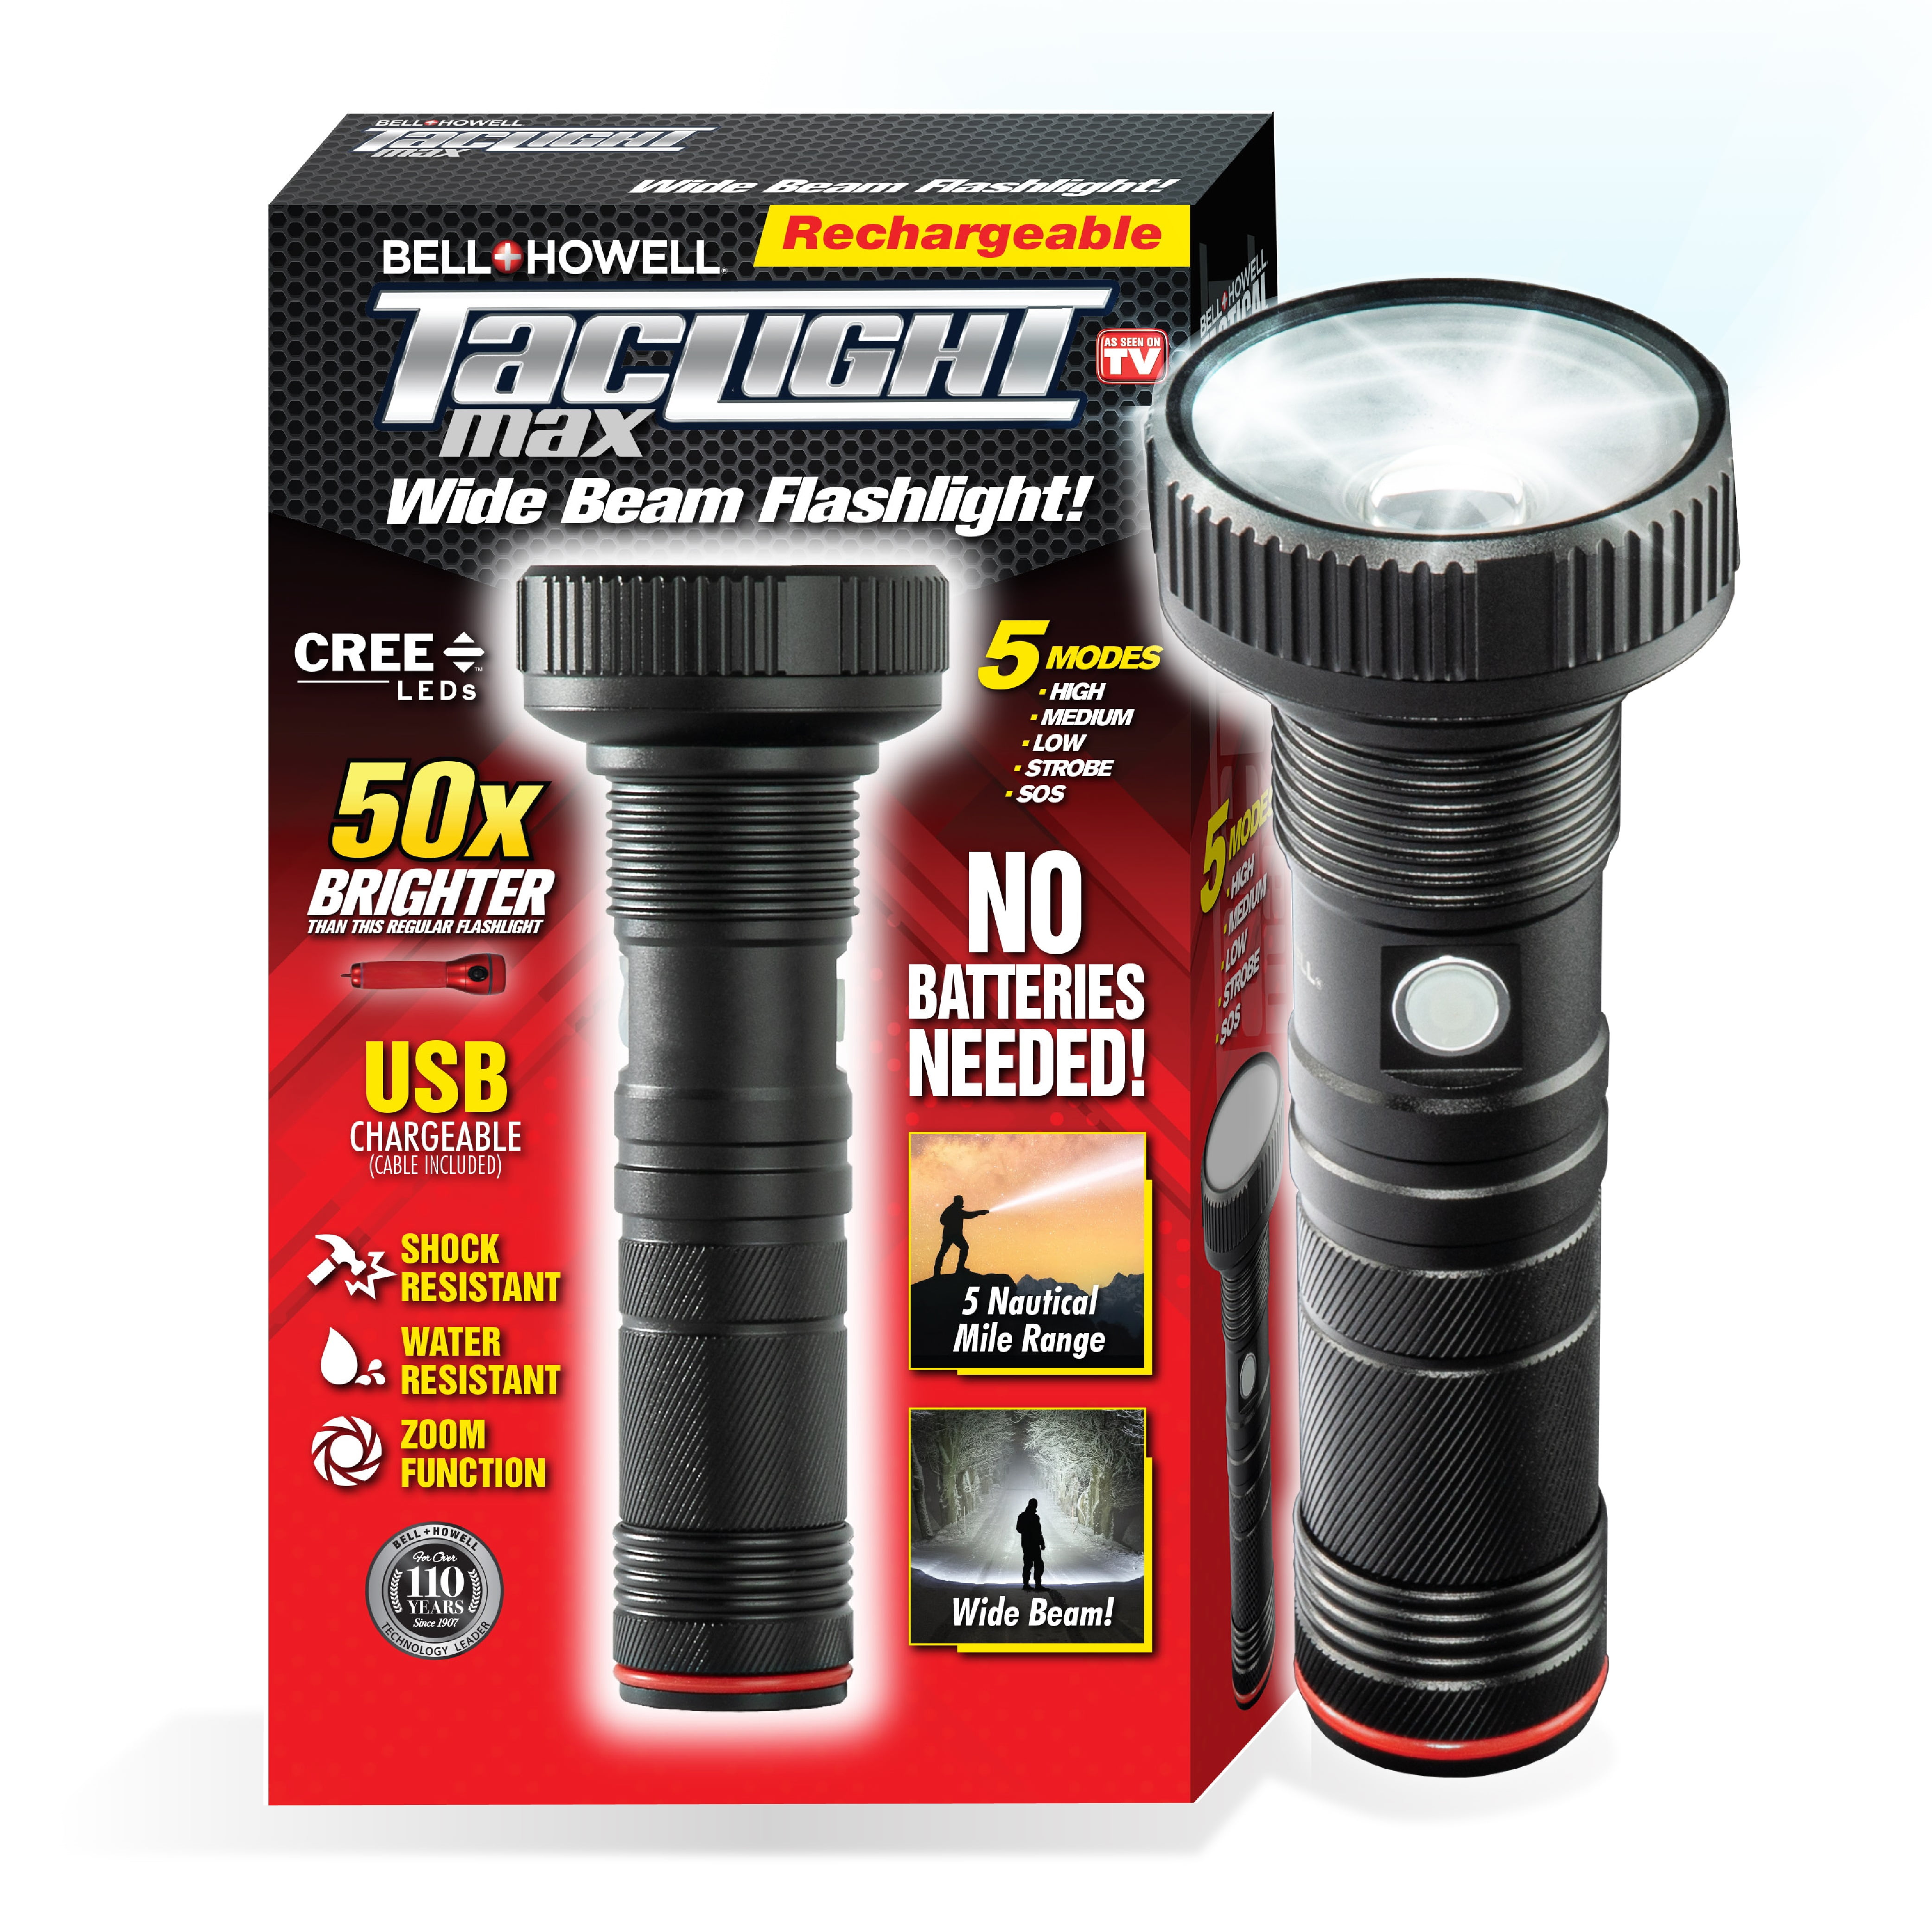 Taclight Max Tac Flashlight 5 Modes Tactical Rechargeable Flashlight